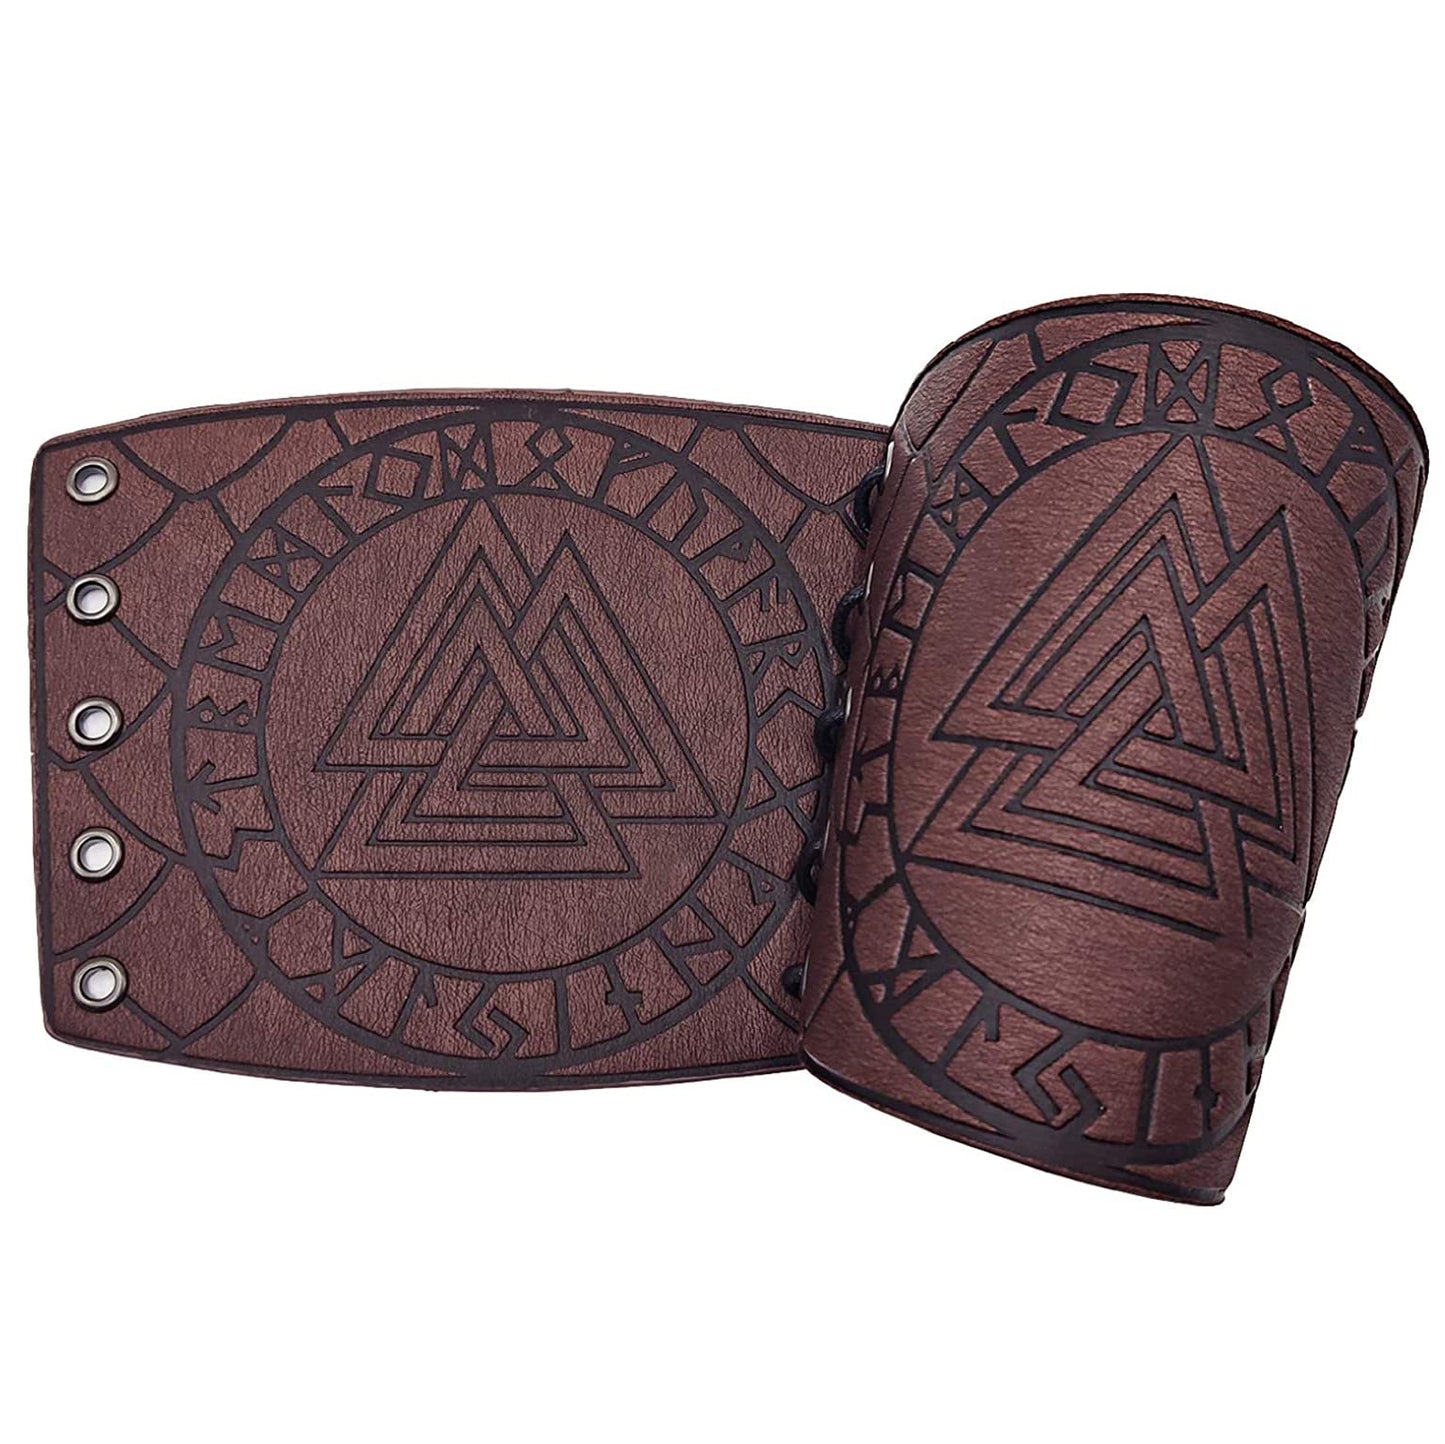 Viking Leather Bracers - Medieval LARP Armor